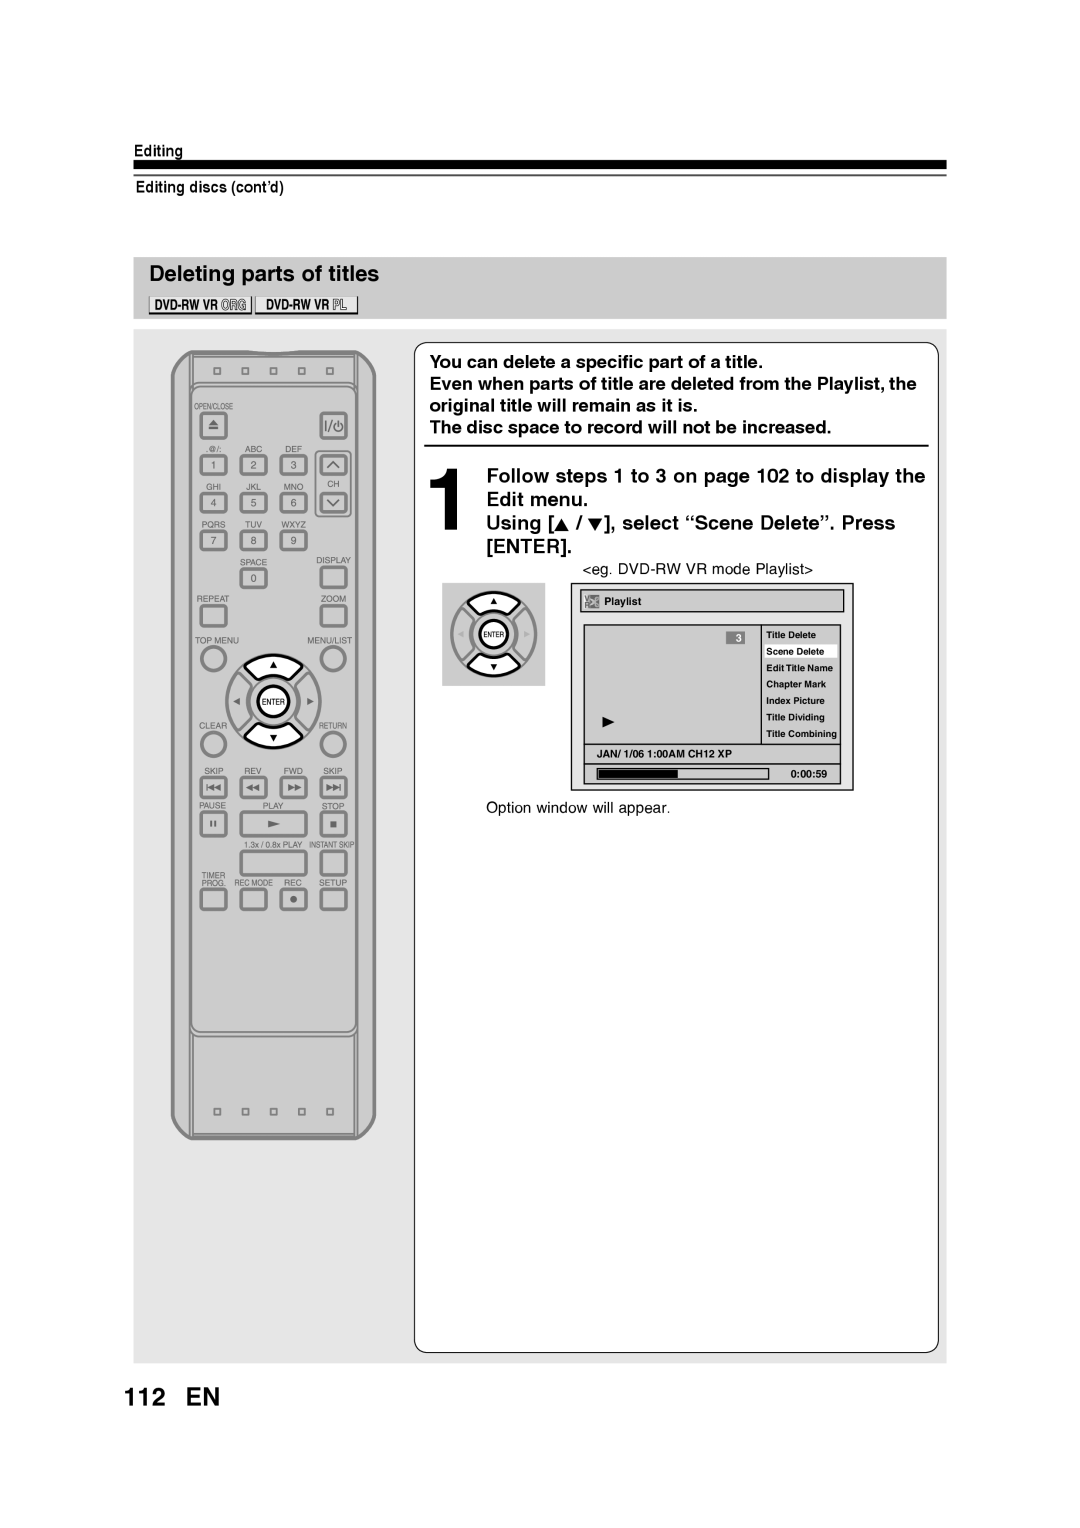 Toshiba D-RW2SU/D-RW2SC manual 112 EN, Deleting parts of titles, Using K / L, select “Scene Delete”. Press ENTER, Playlist 